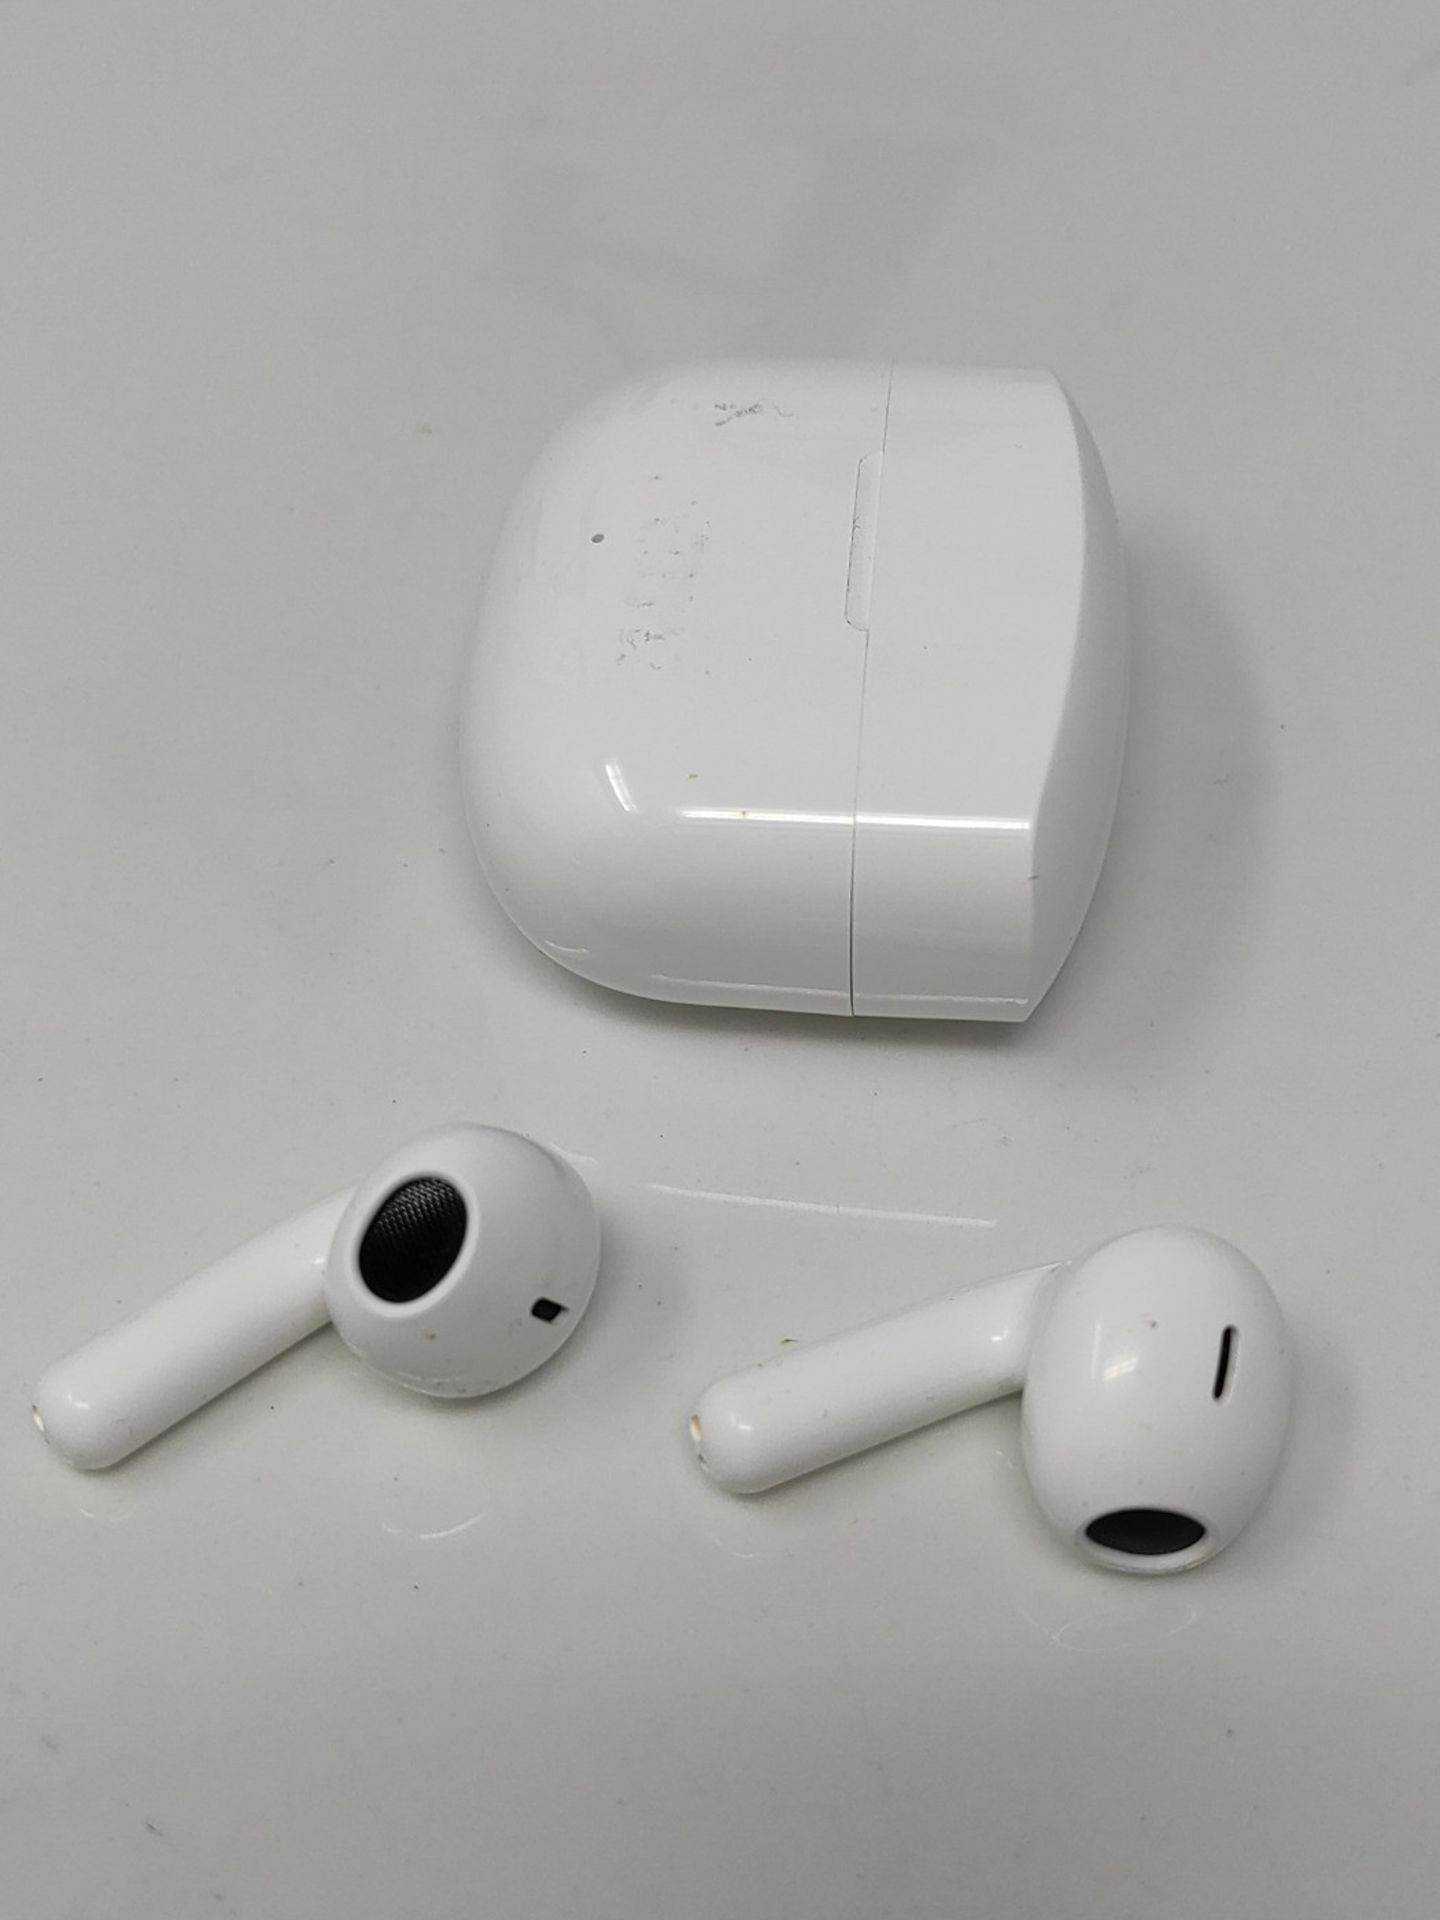 BKFRD in Ear headphones with microphone, Wireless 5.1 HiFi stereo sound, IPX7 Wireless